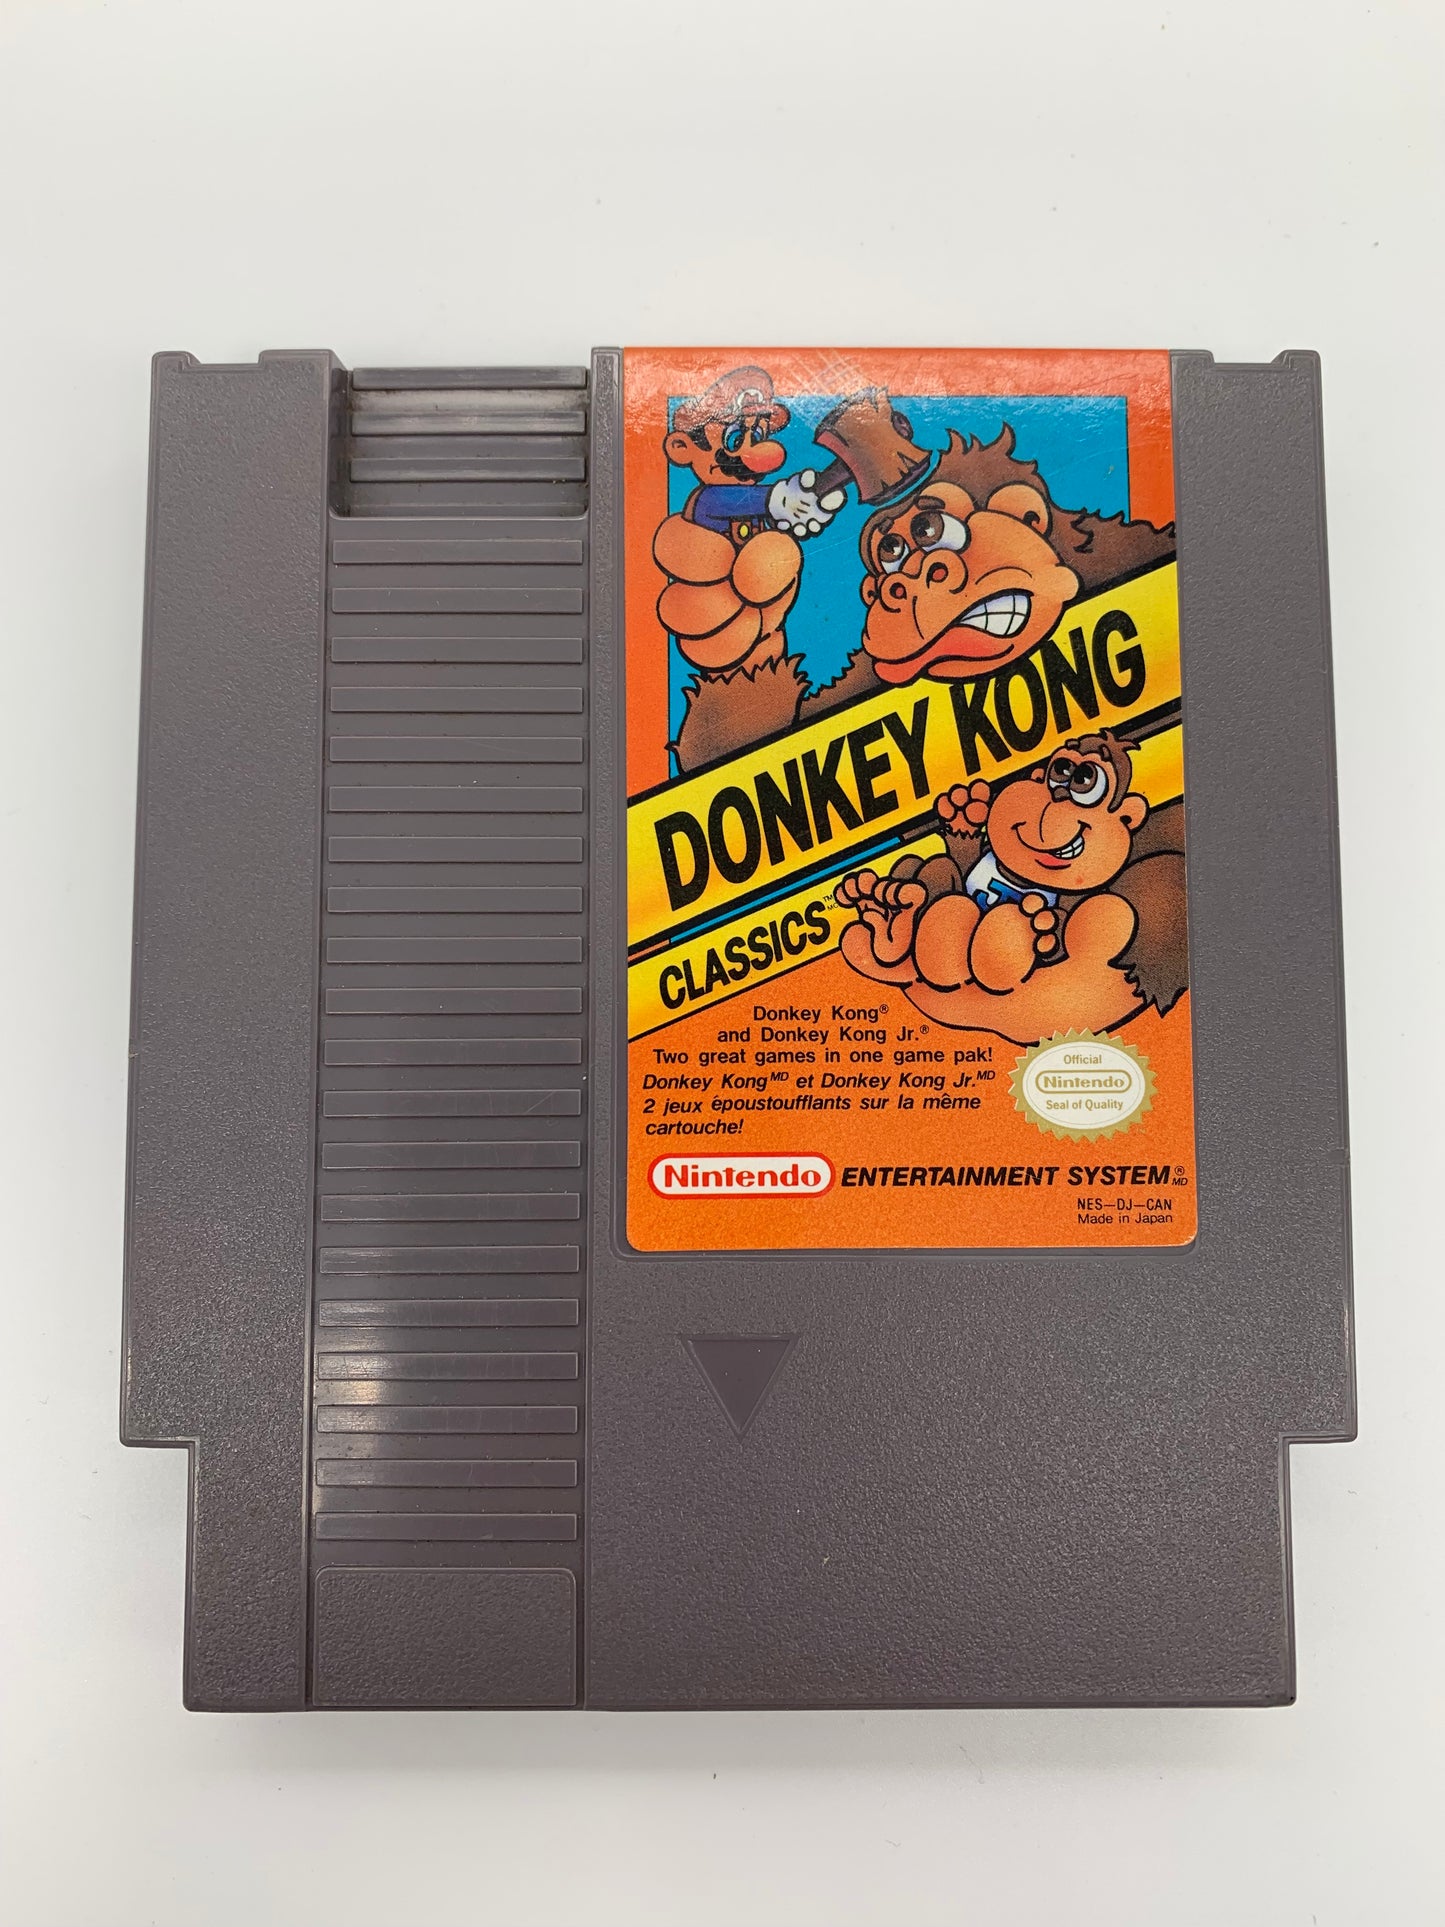 PiXEL-RETRO.COM : NINTENDO ENTERTAiNMENT SYSTEM (NES) GAME NTSC DONKEY KONG CLASSICS